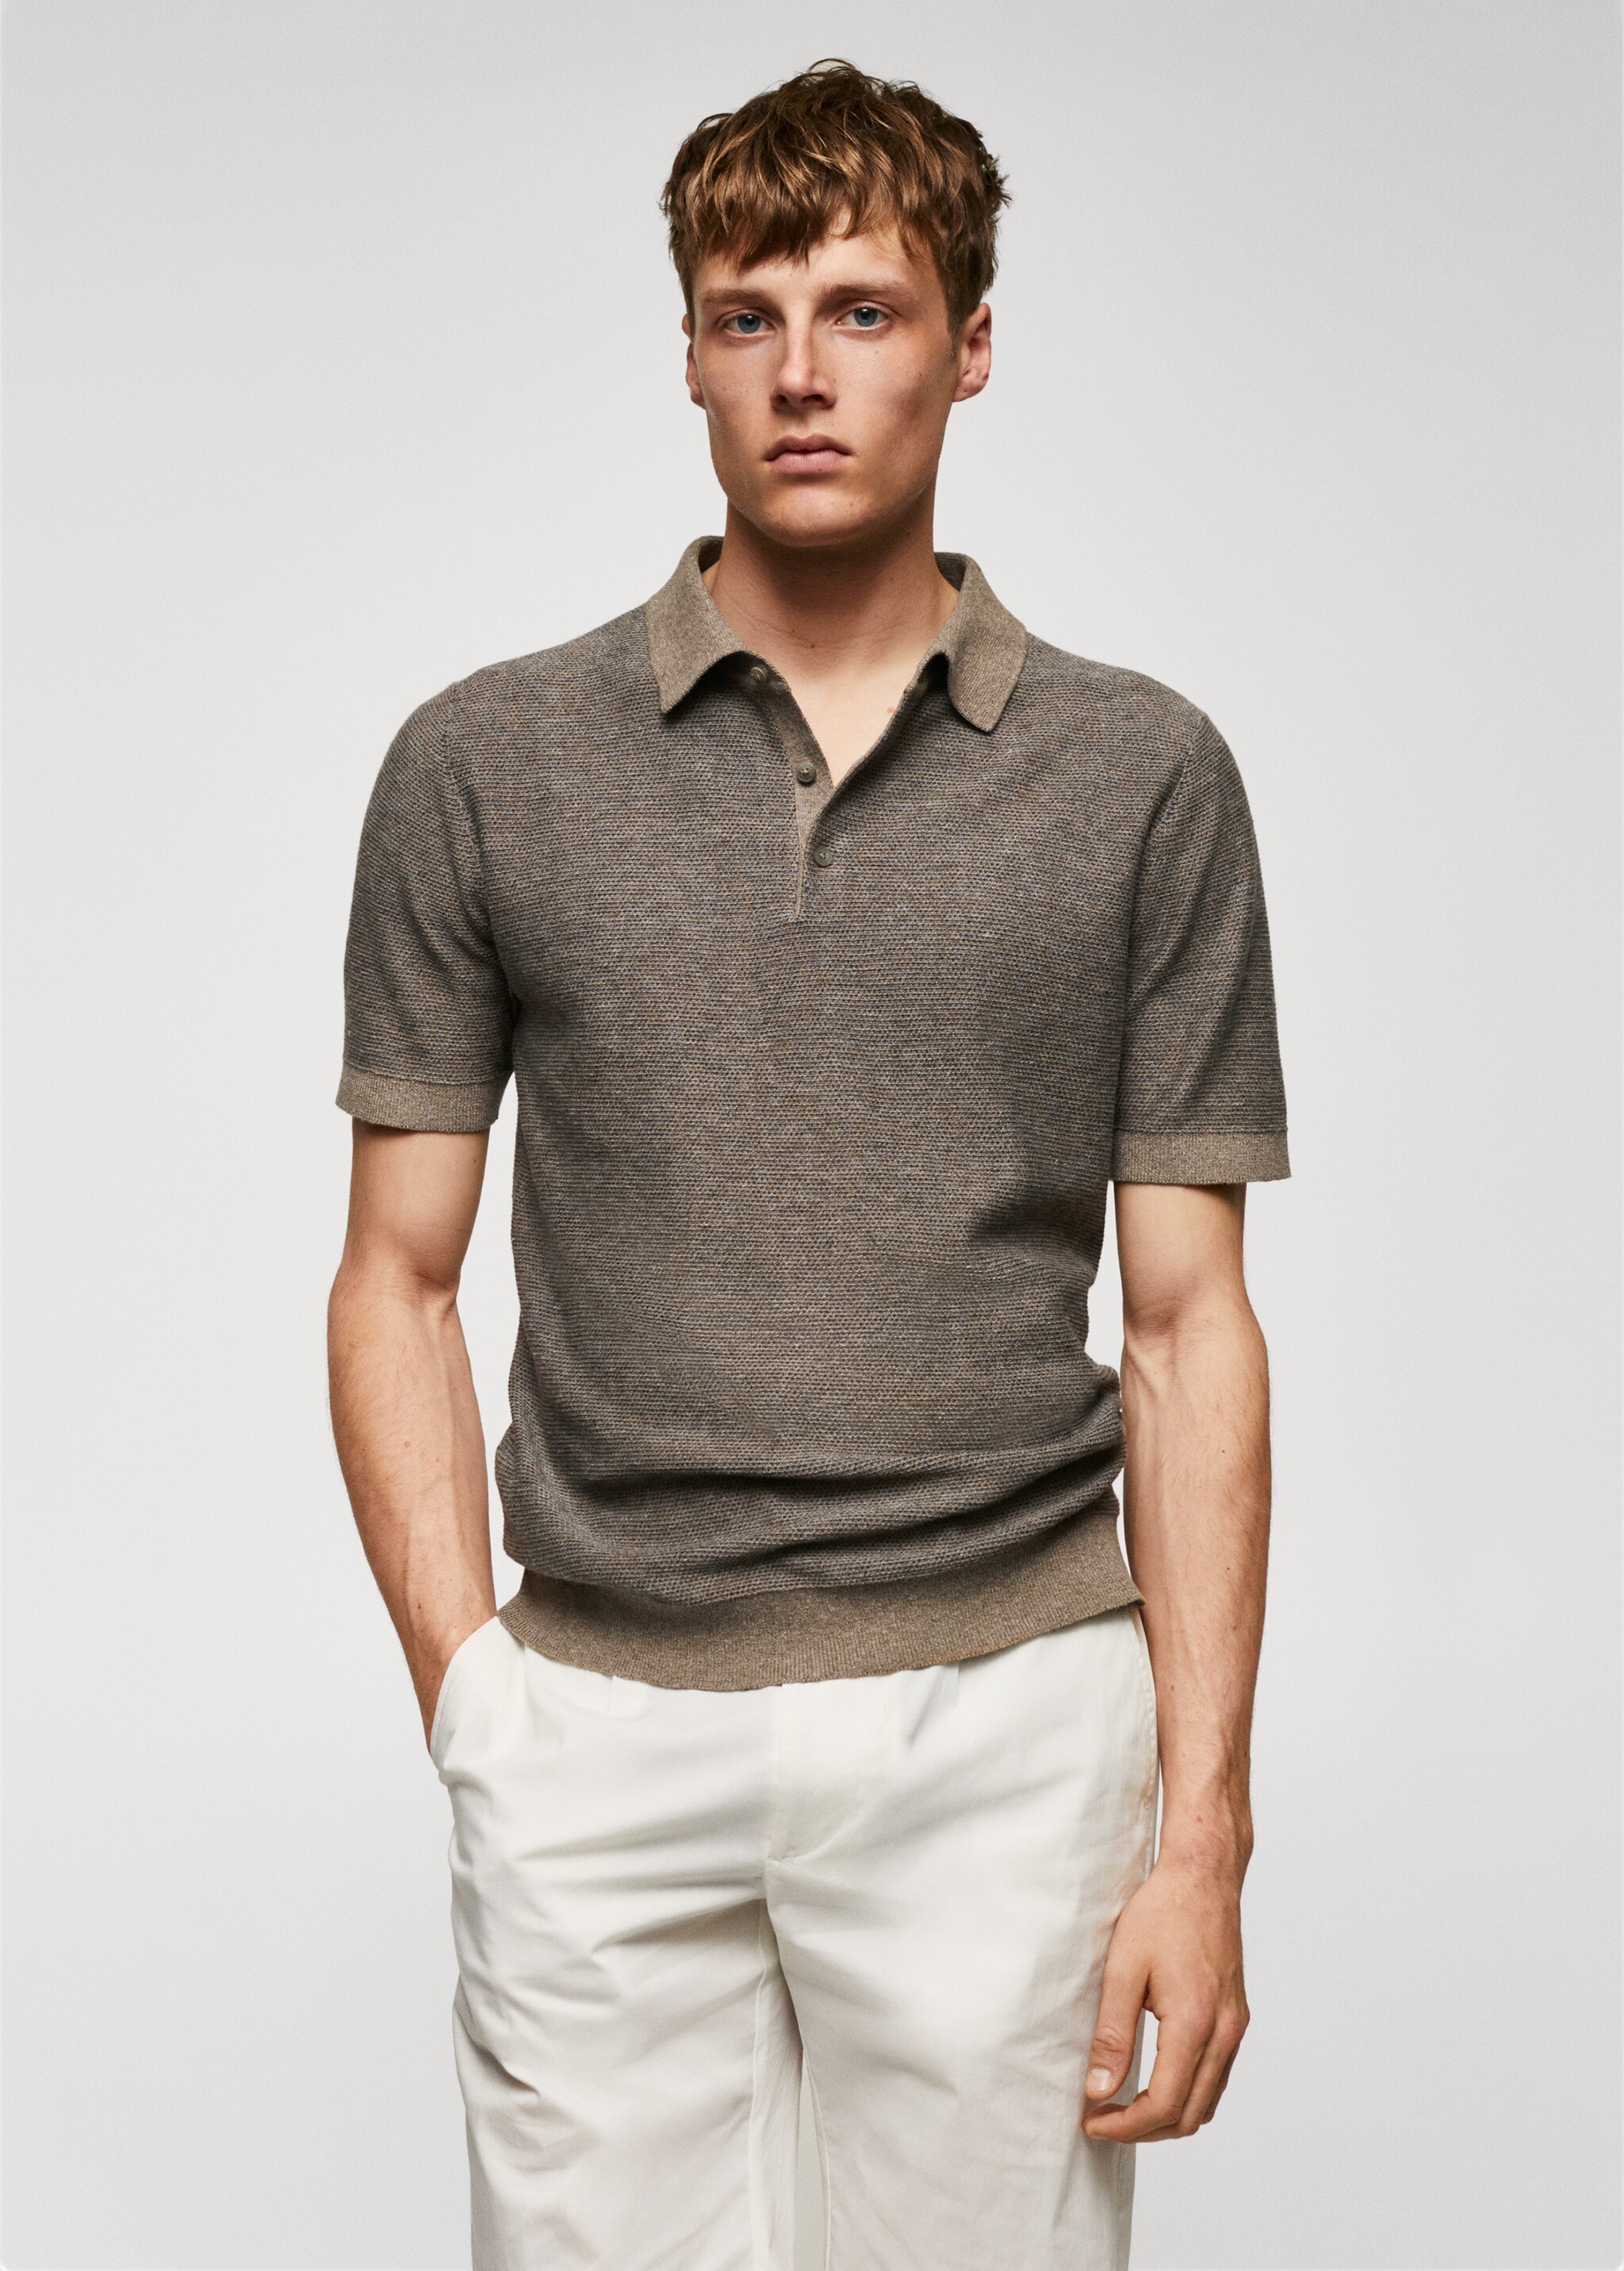 Patterned cotton polo shirt - Medium plane